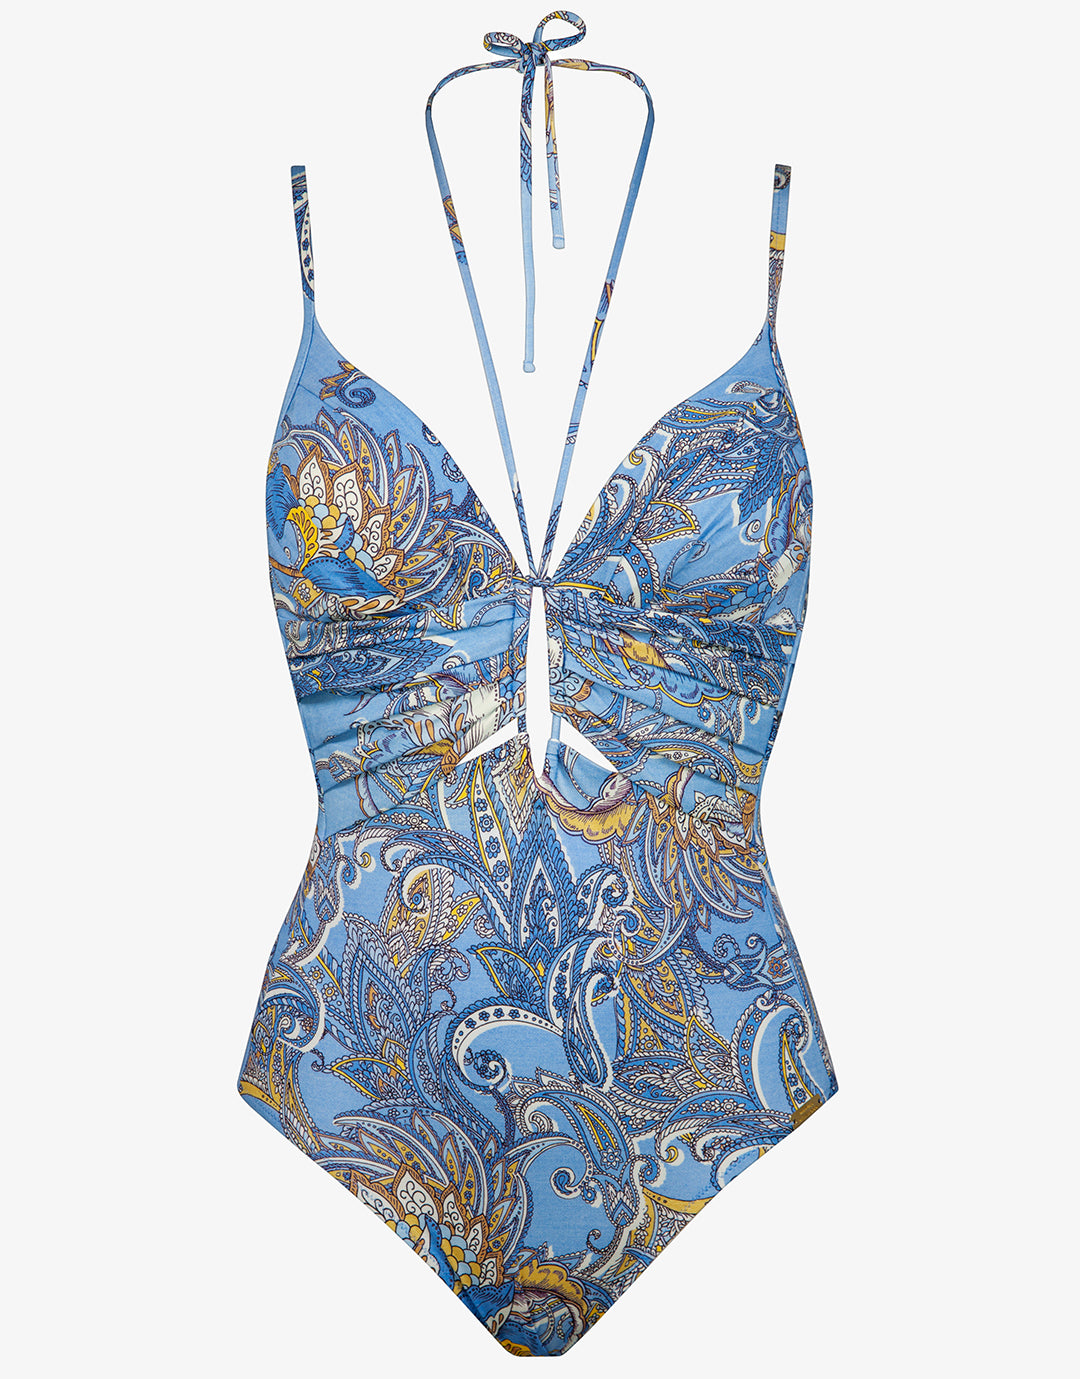 Majorelle Swimsuit - Oriental Horizon Blue - Simply Beach UK